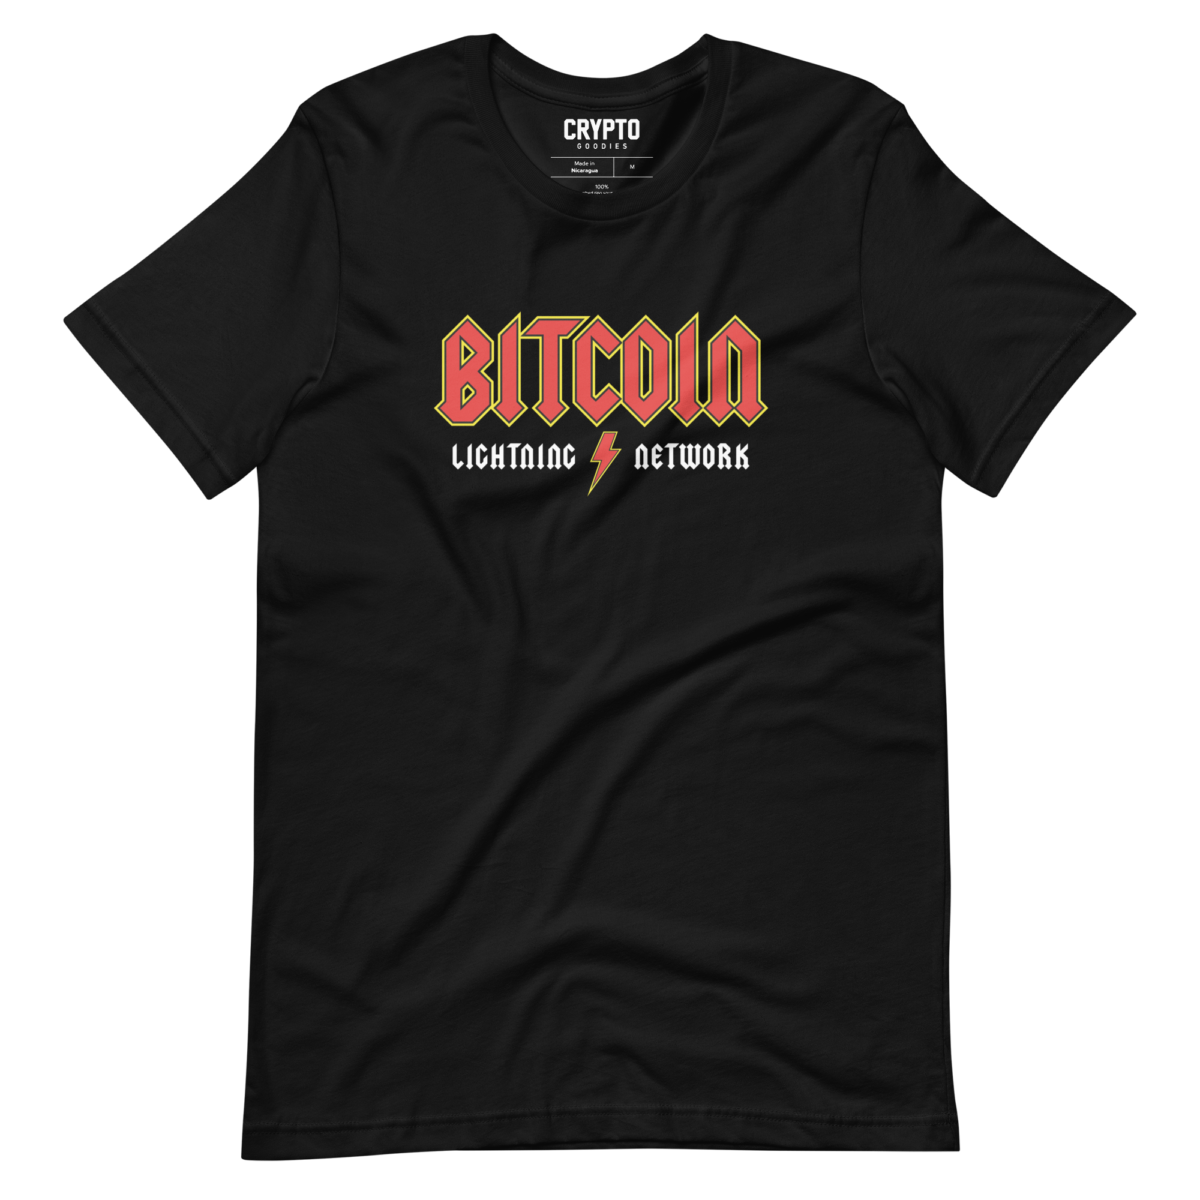 unisex staple t shirt black front 6330ad170098f - Bitcoin Lightning Network